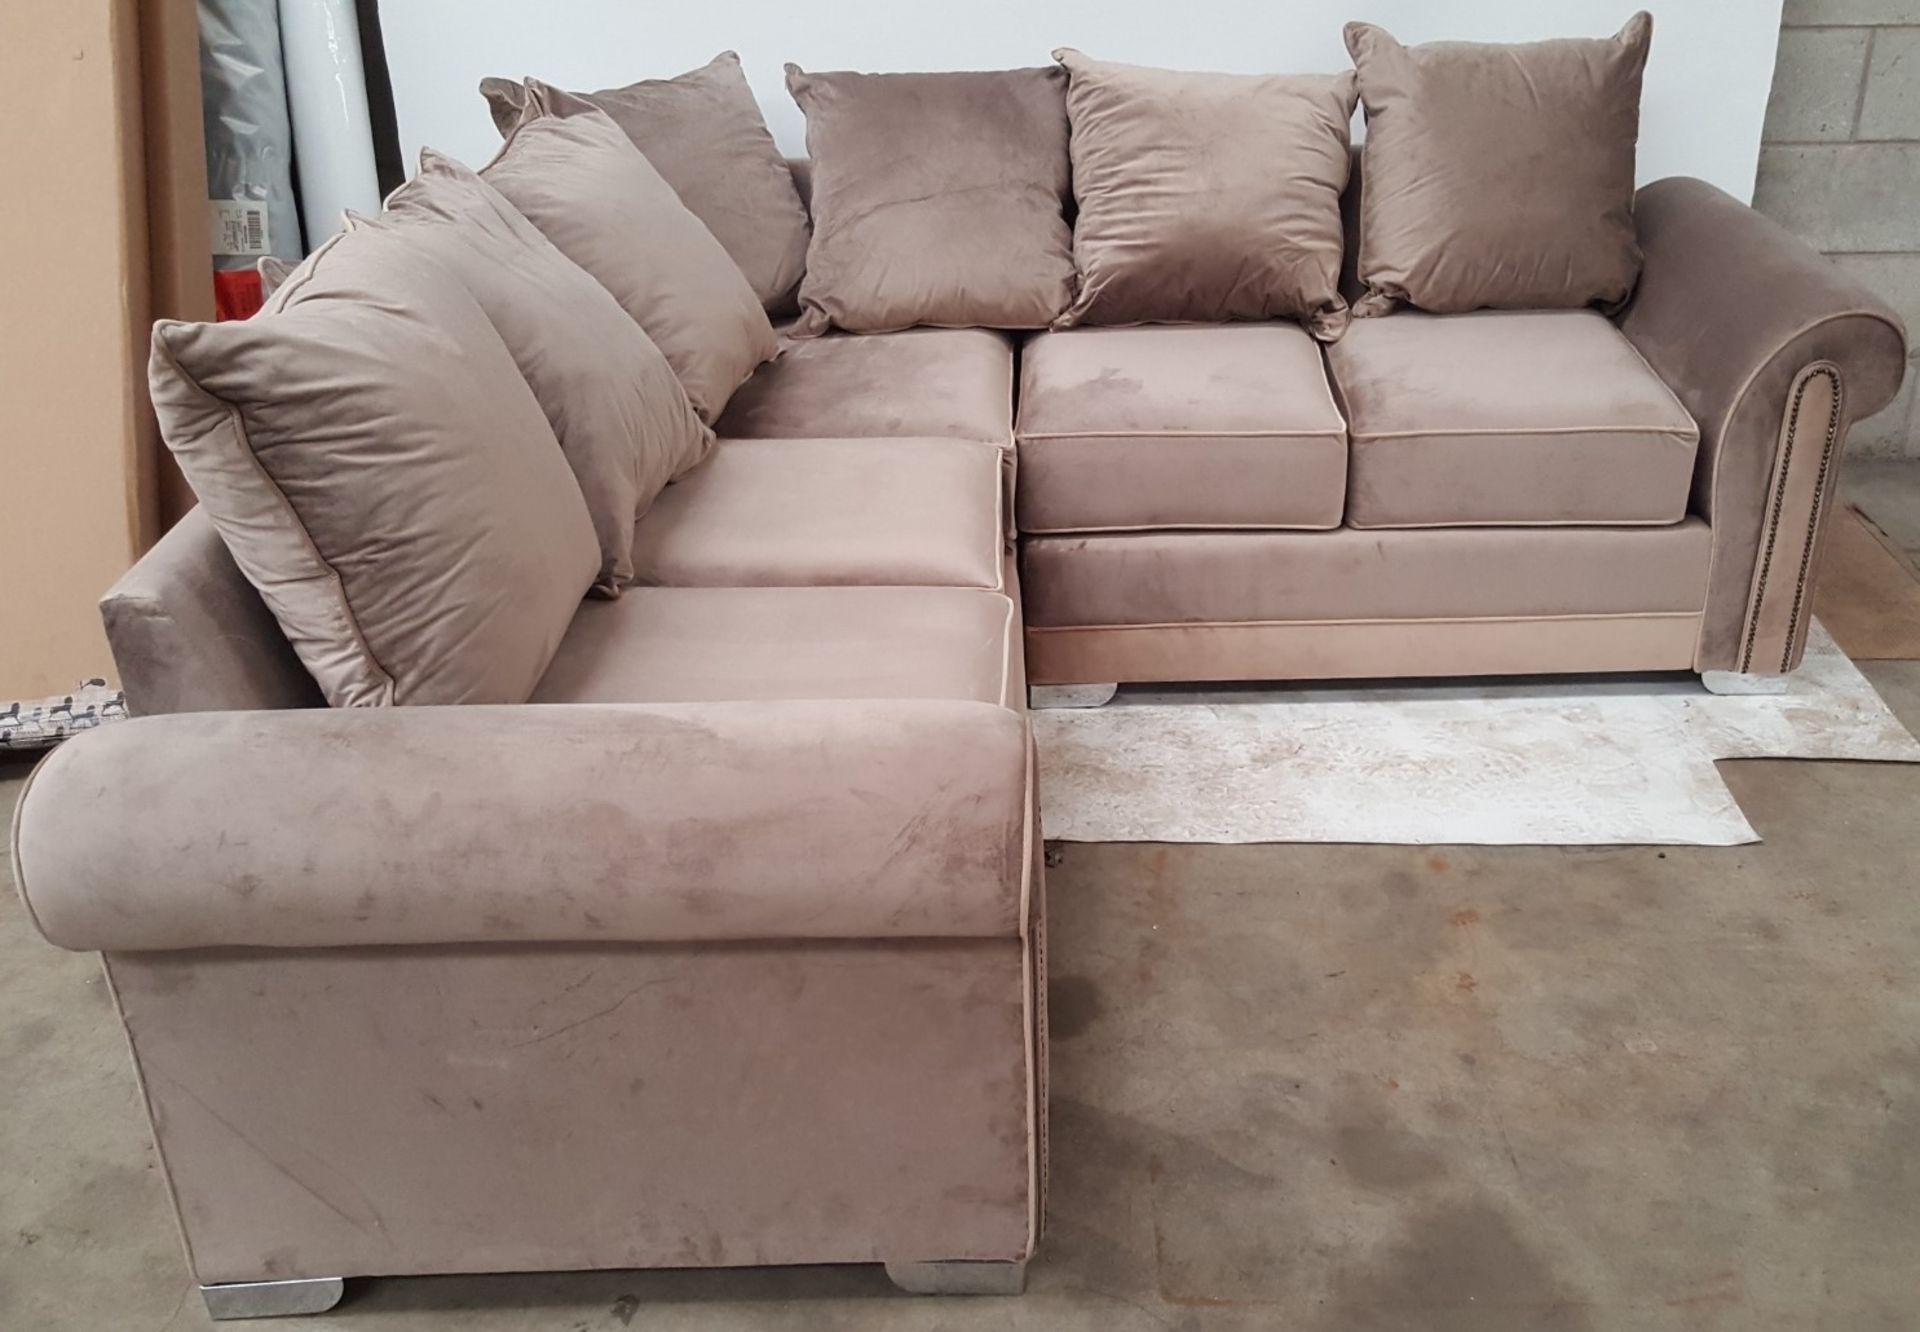 1 x Lavish Moroccan Brown Plush Velvet L-Shaped Corner Seater Sofa - Ref BY197 - Image 2 of 7